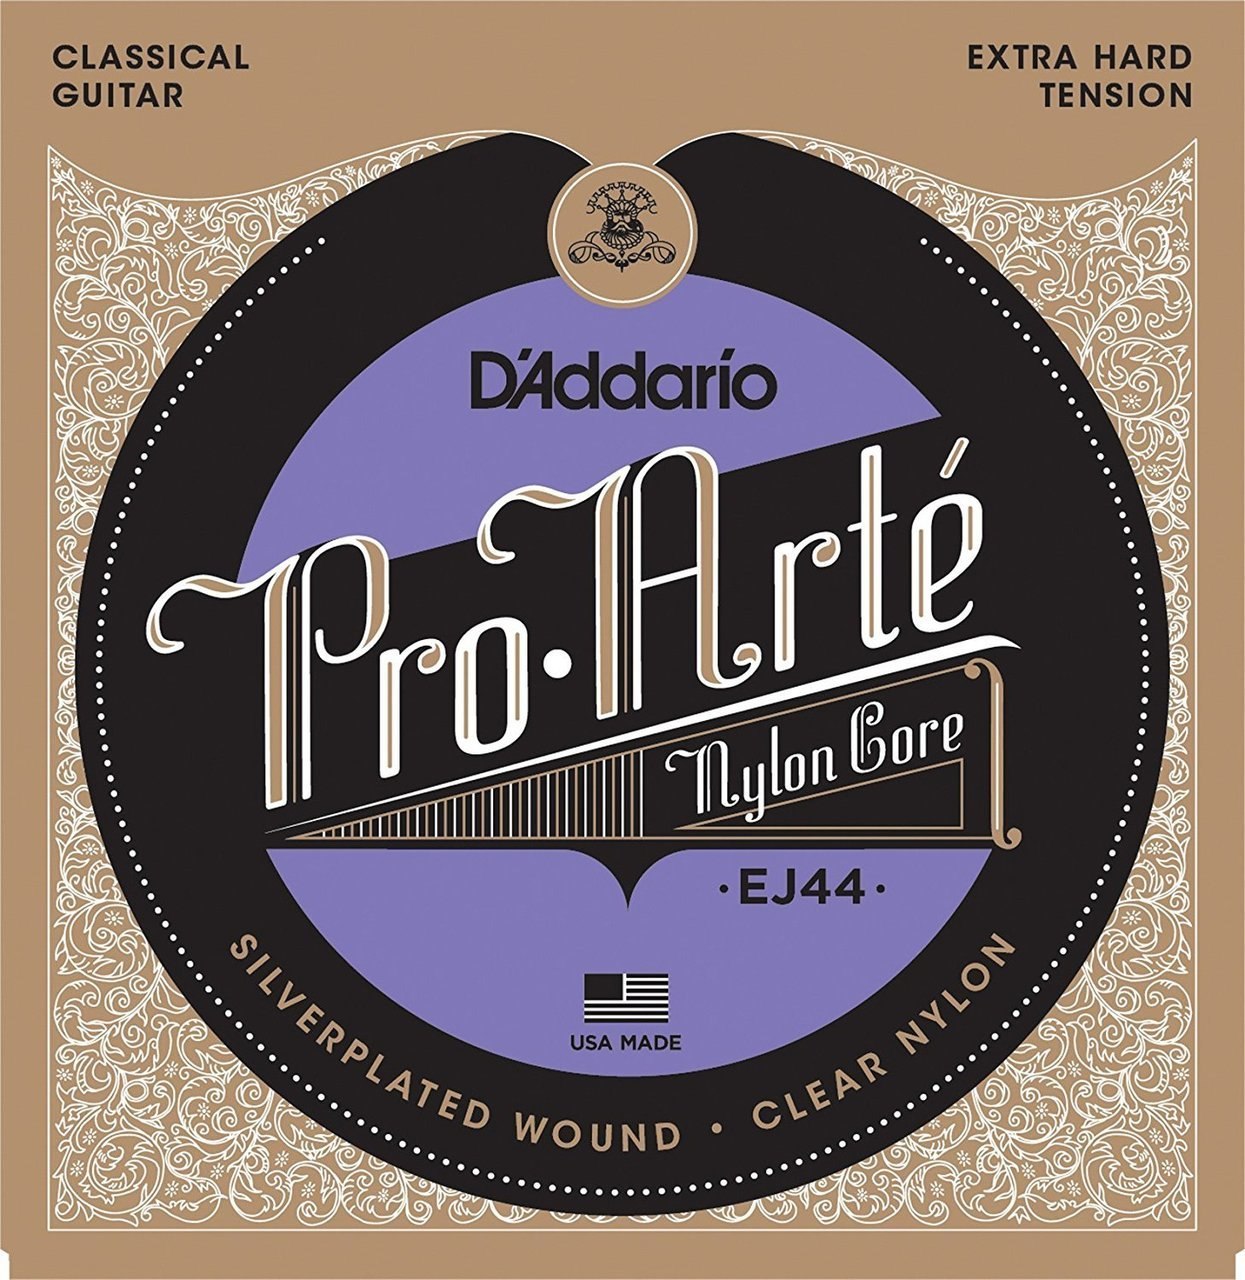 D'Addario Pro Arte Nylon Core Classical Extra Hard Tension Guitar String Set